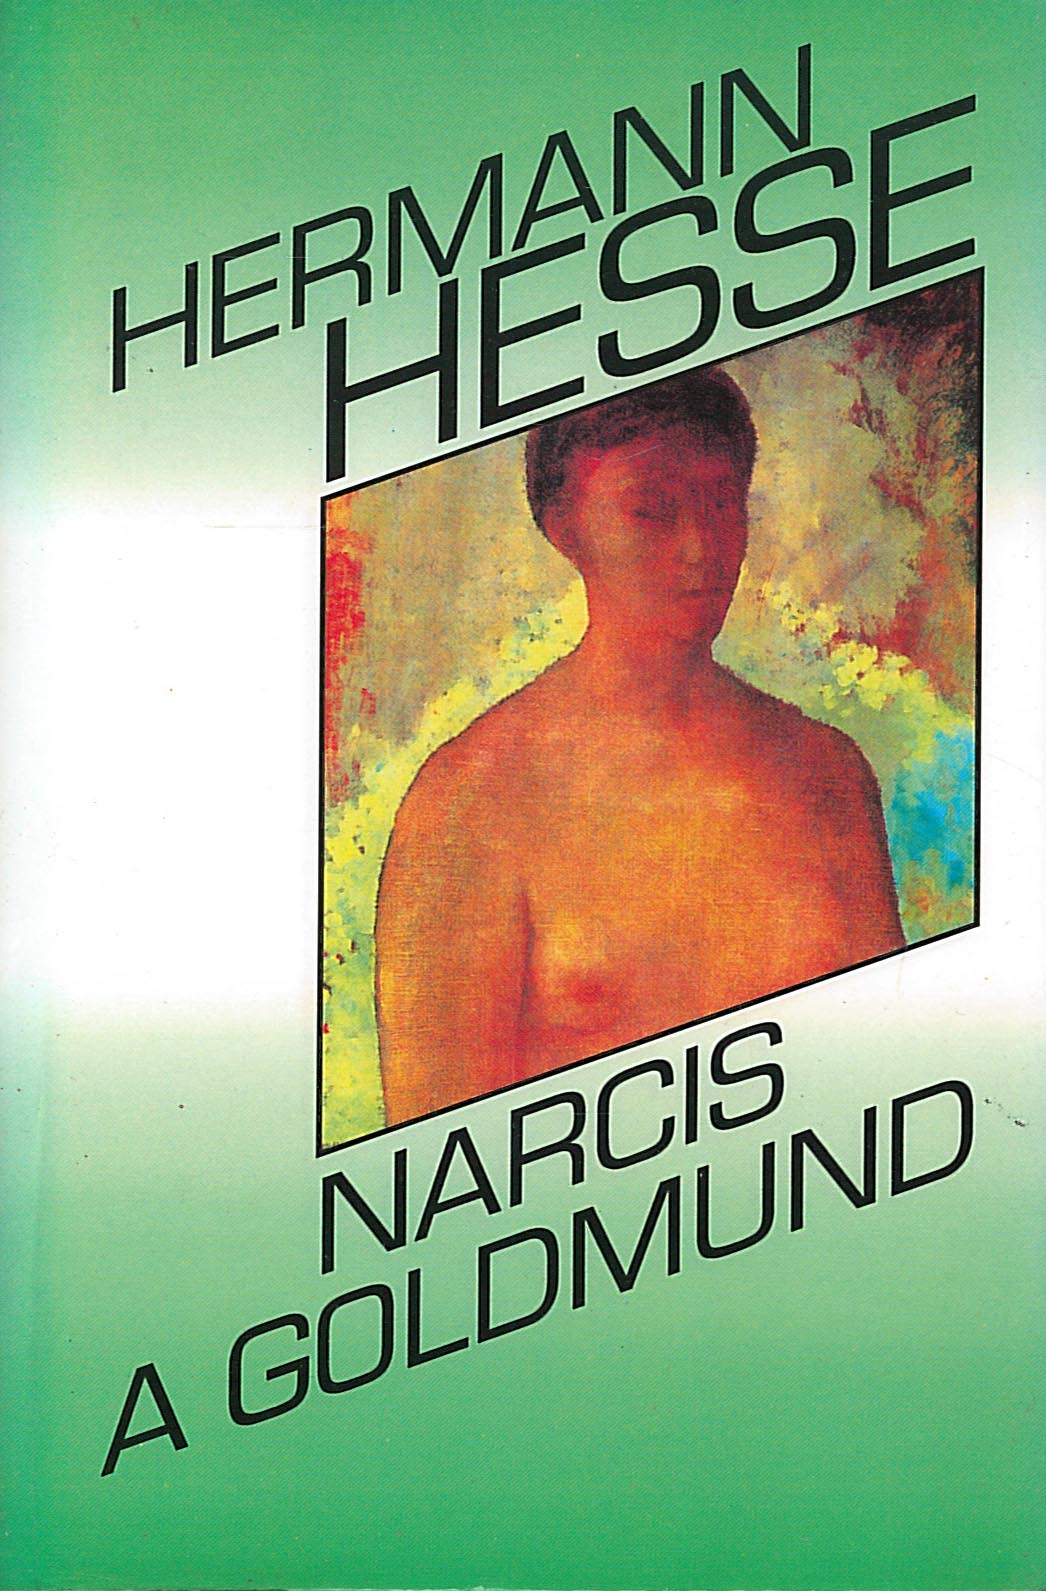 Narcis a Goldmund (Hermann Hesse)